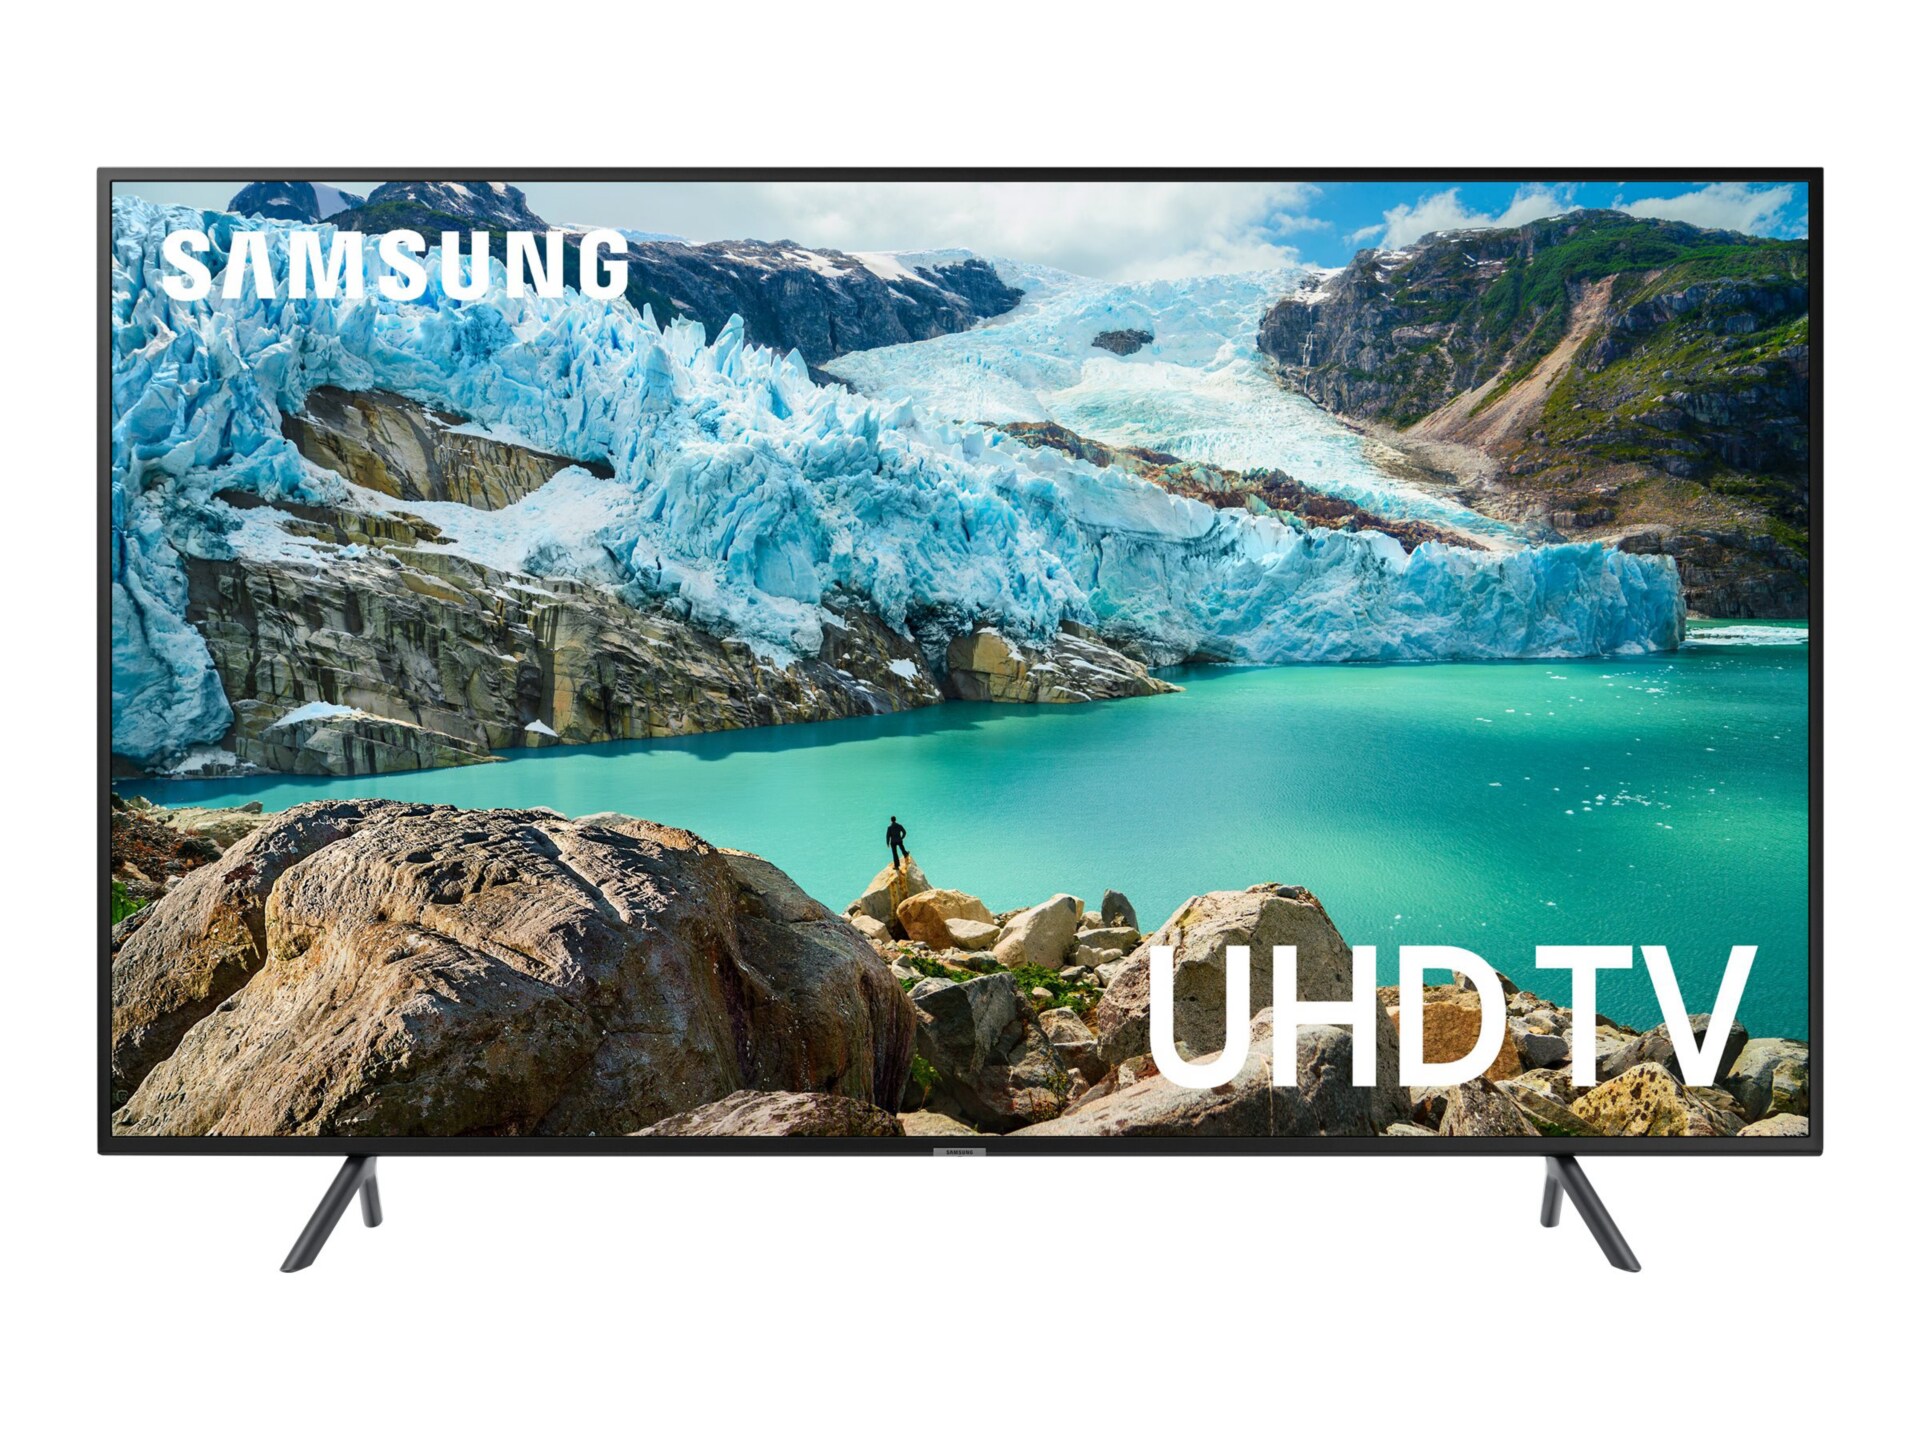 Samsung UN43RU7100F 7 Series - 43" Class (42.5" viewable) LED TV - 4K